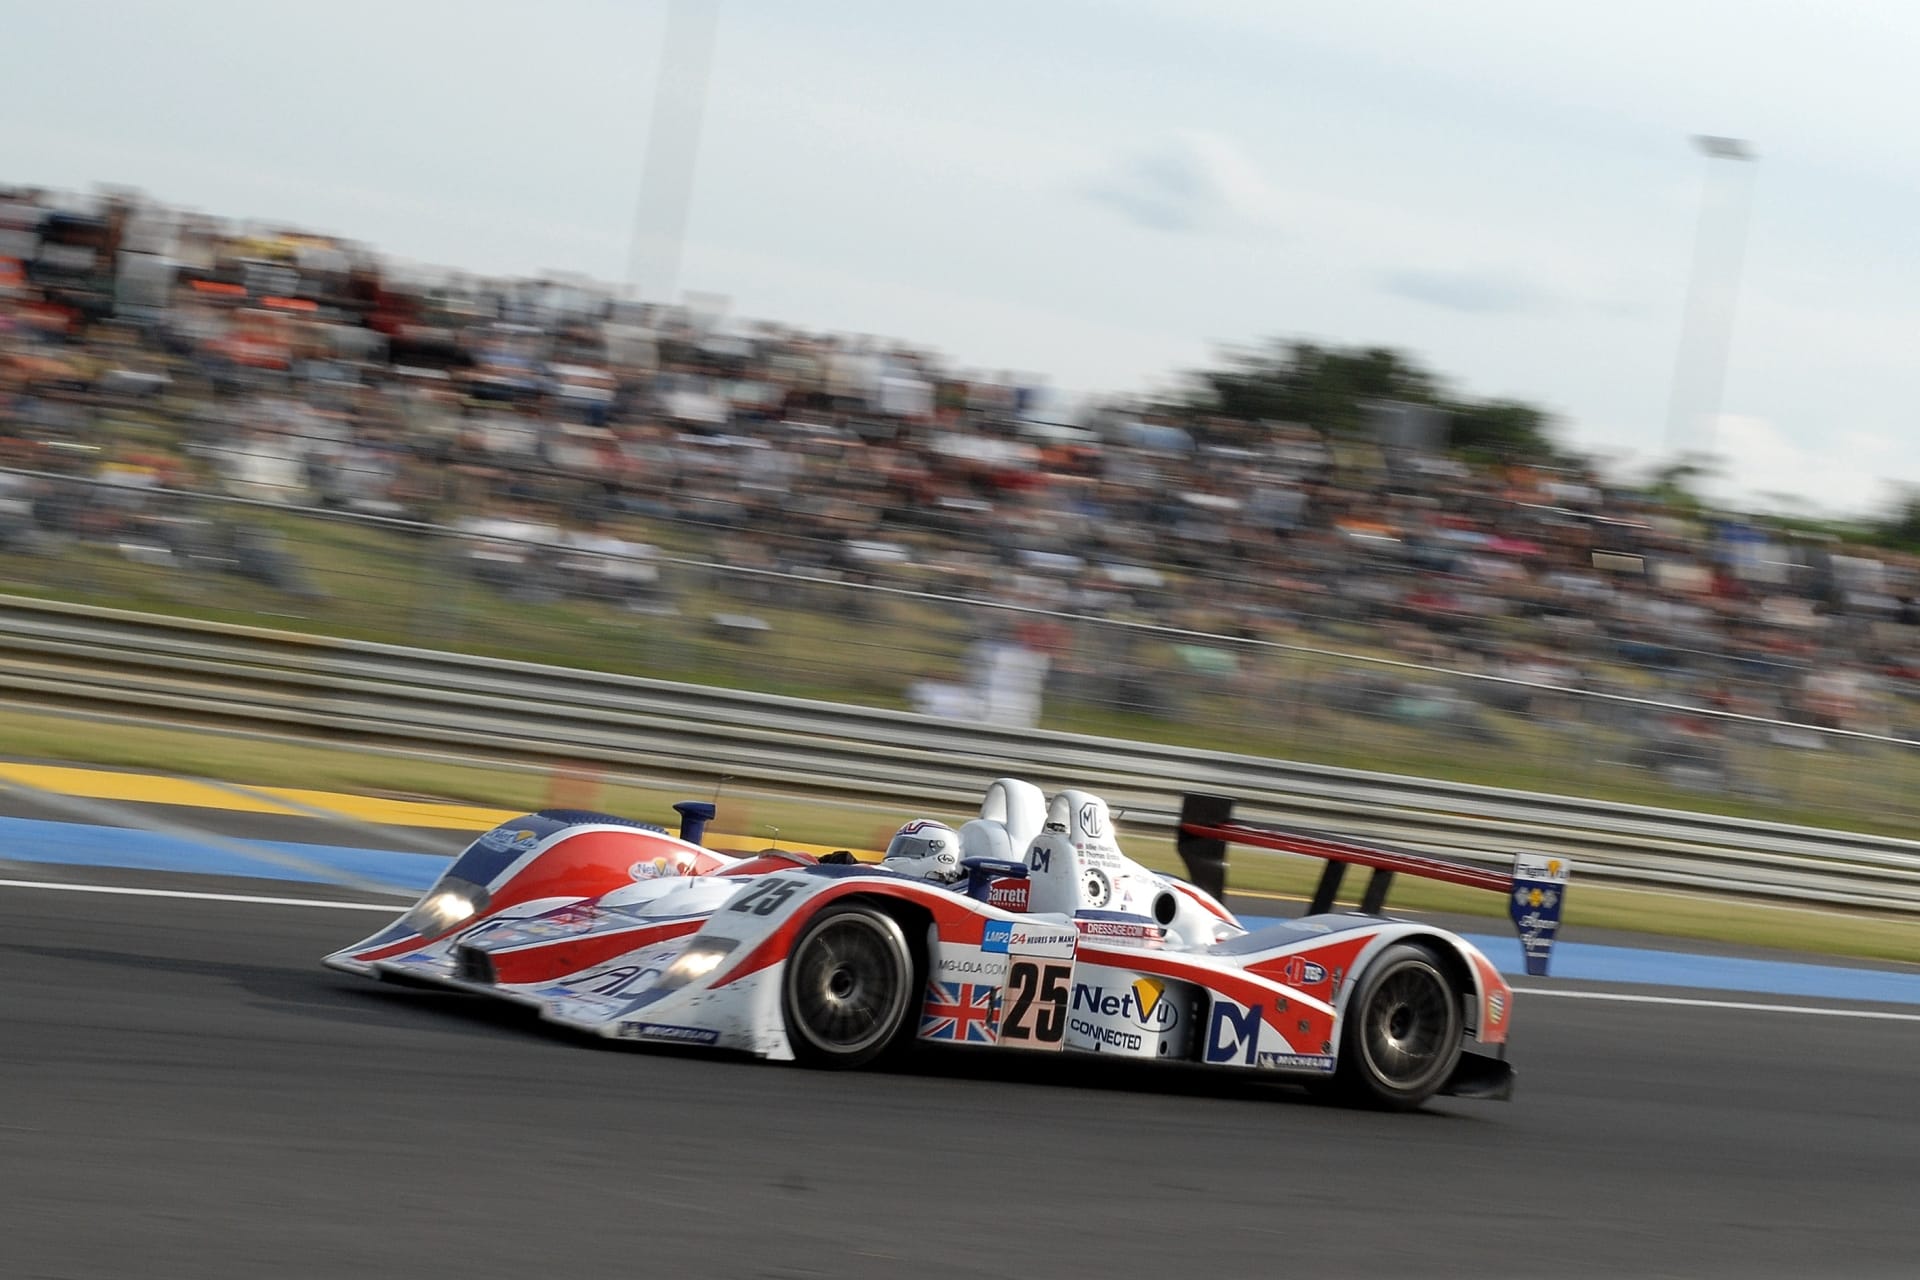 Throwback Thursday: Le Mans 2008 photo gallery